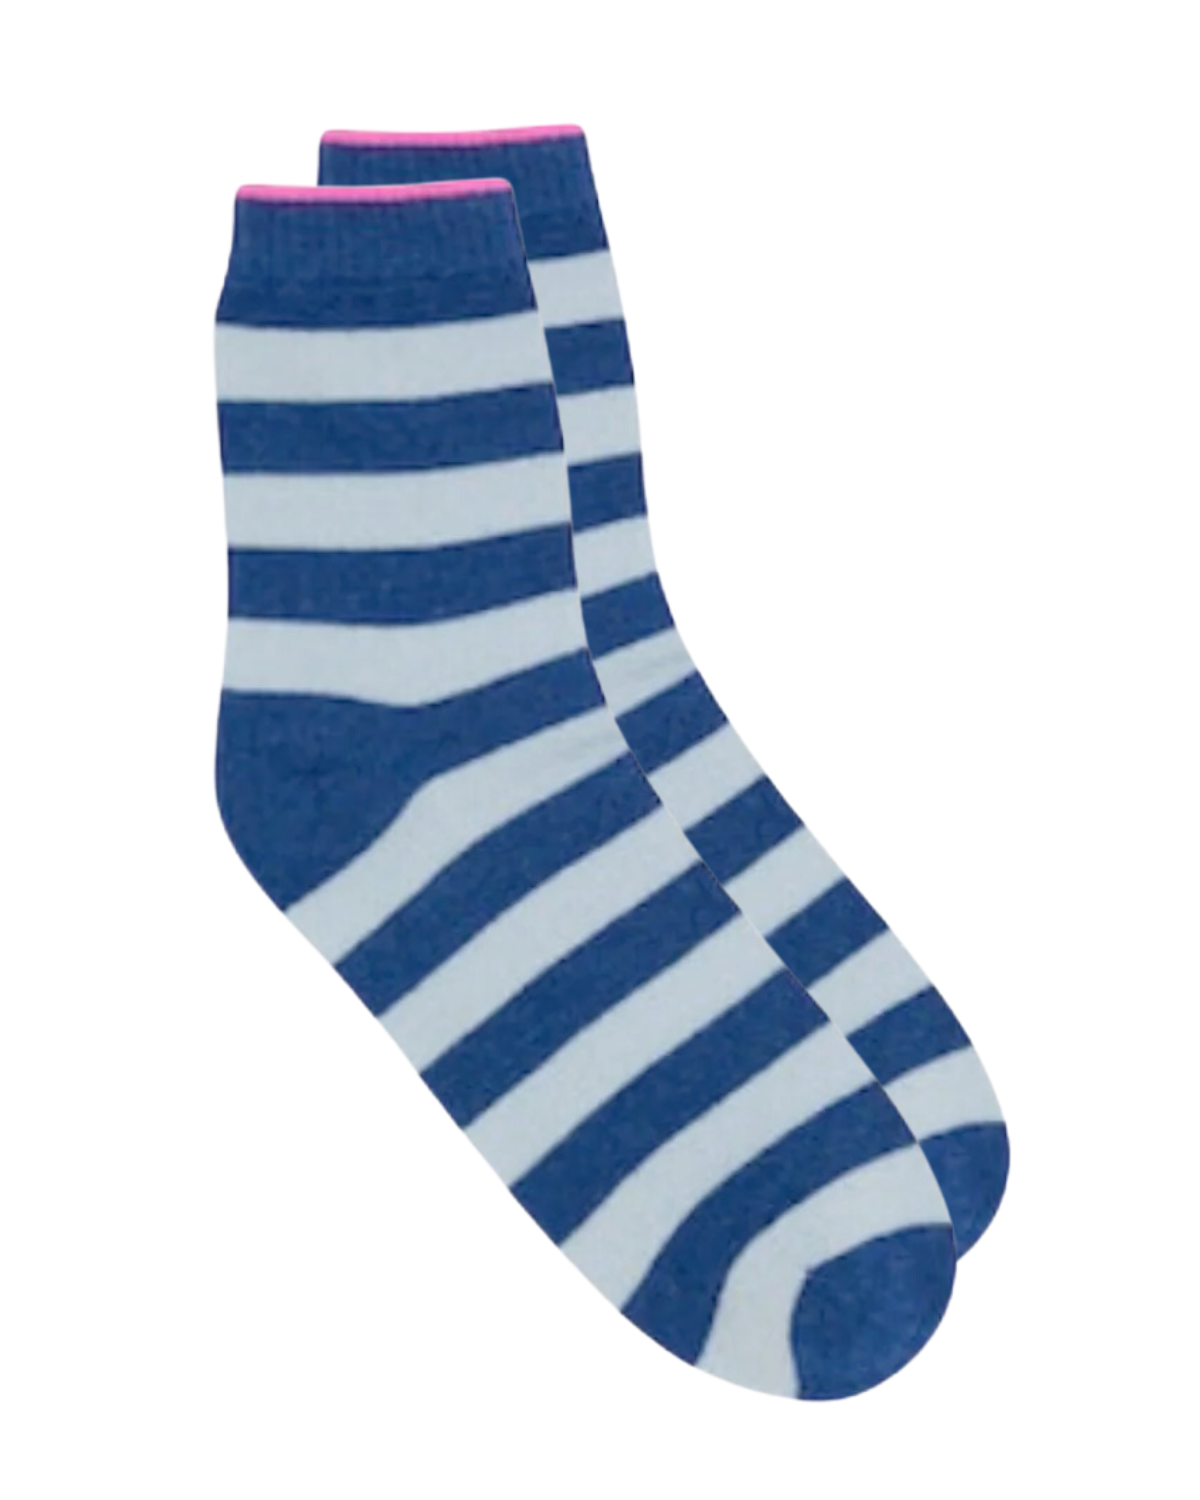 Stripe Socks (Denim/Periwinkle)